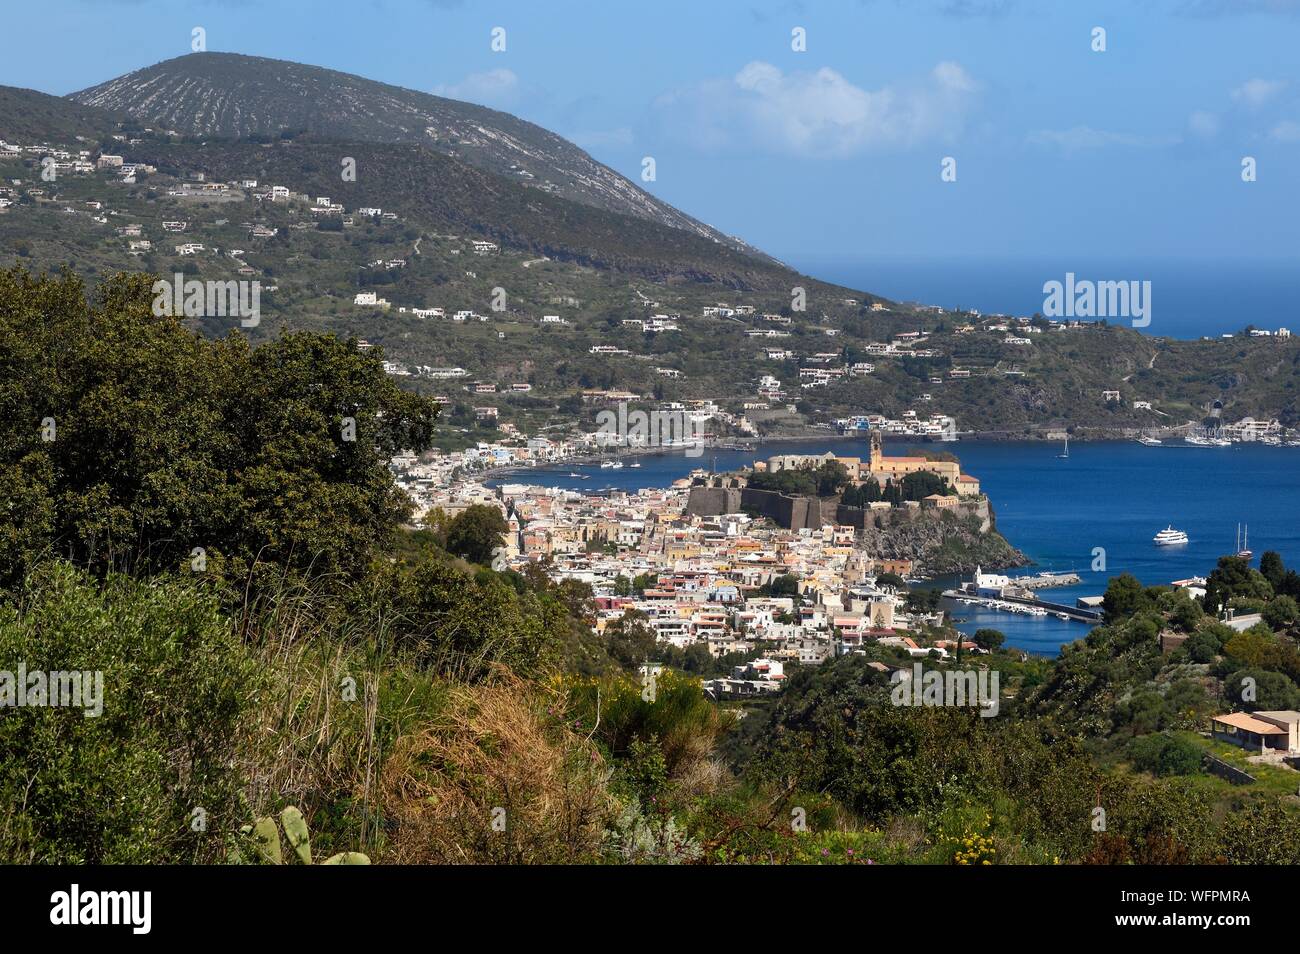 Italien, Sizilien, Liparische Inseln, ein UNESCO Weltkulturerbe, Insel Lipari, Salina, Lipari durch seine Zitadelle Stockfoto